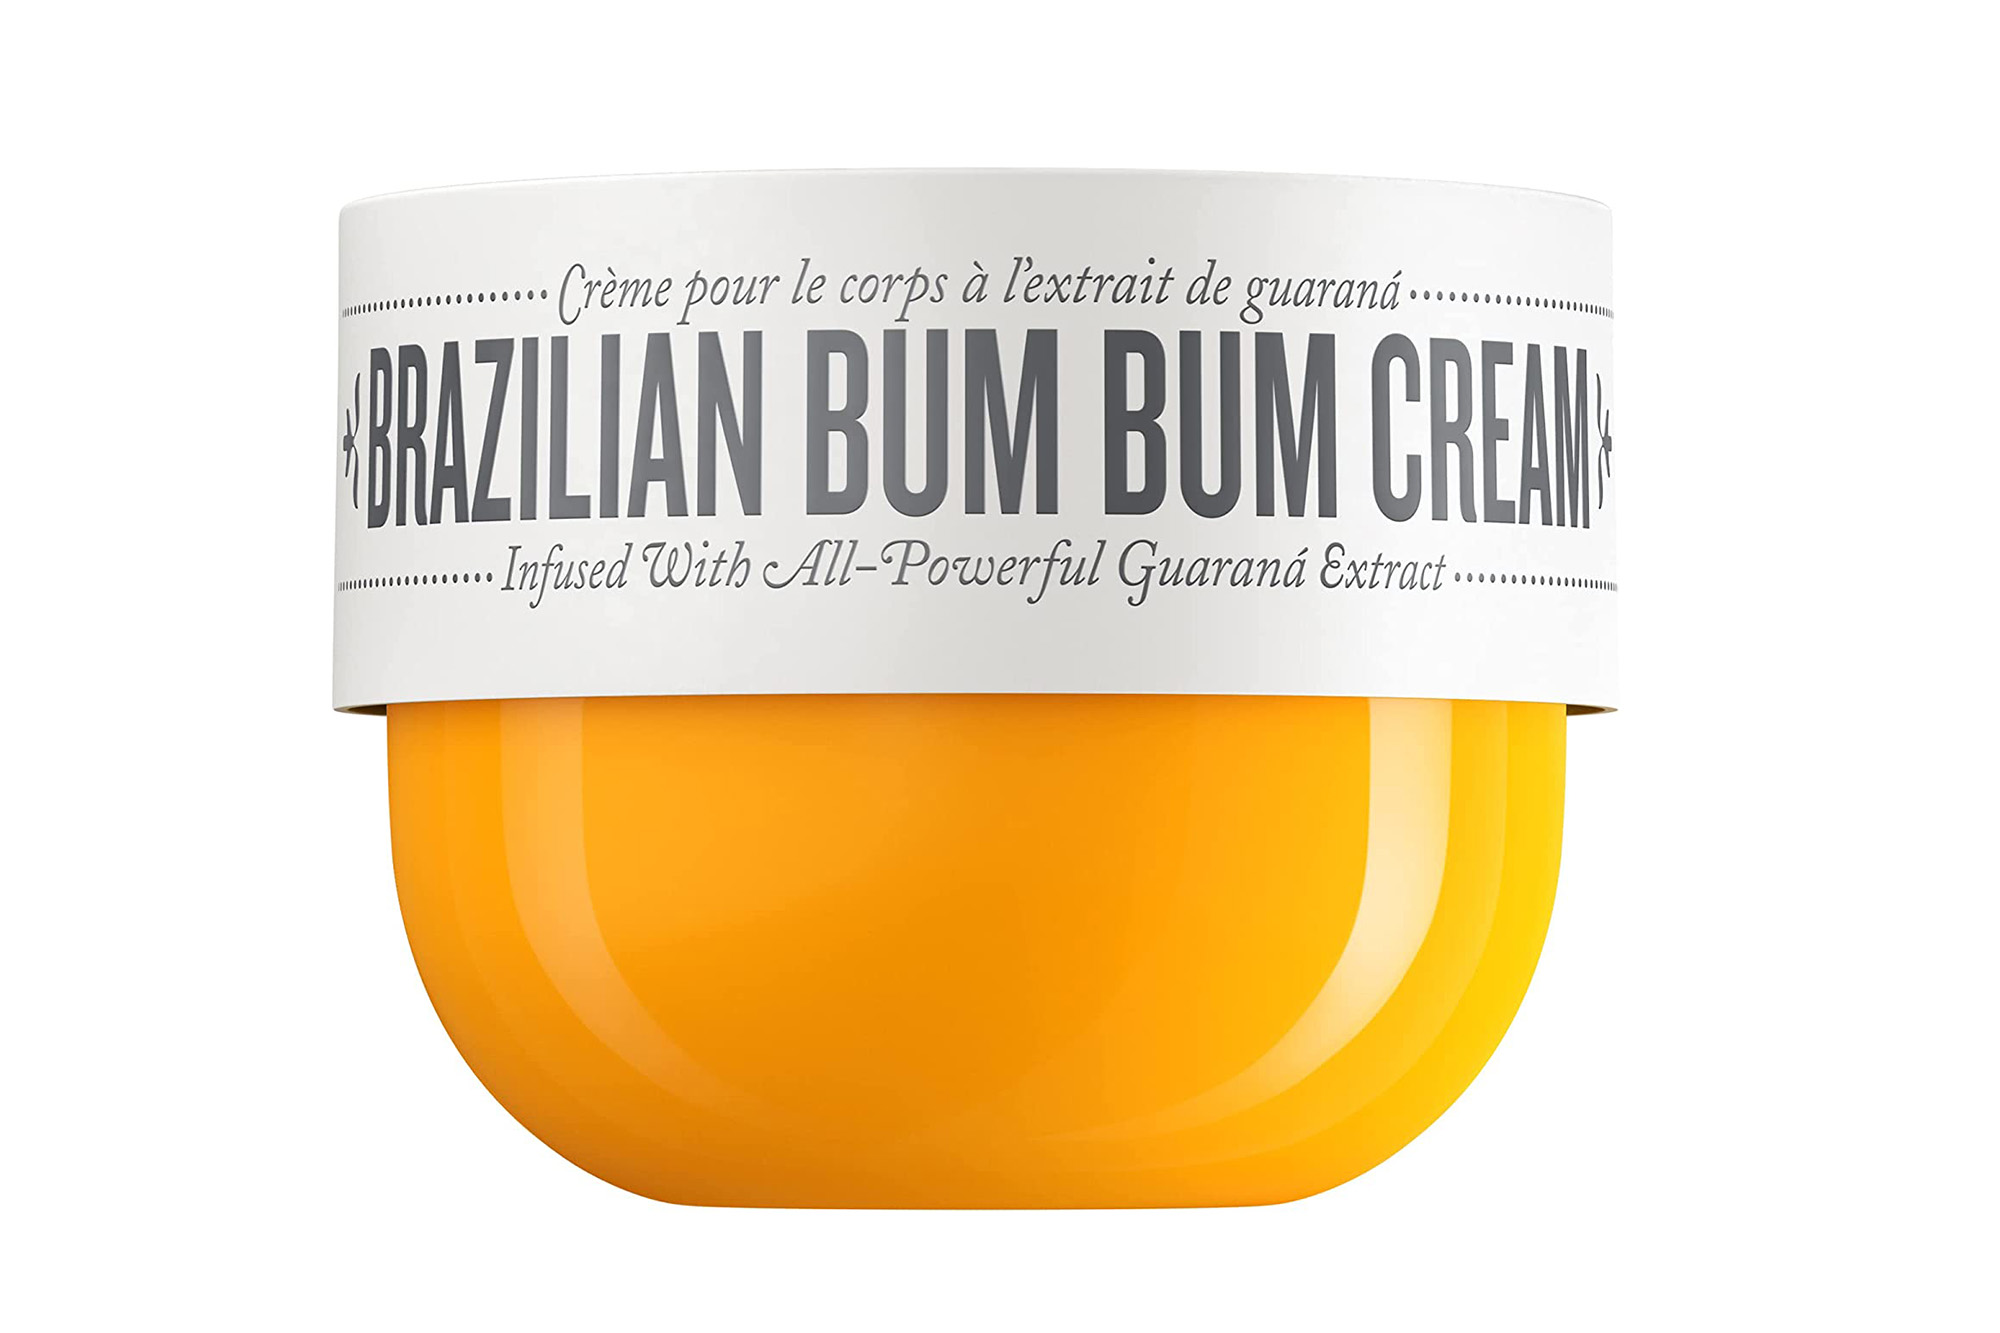 A yellow jar of Sol de Janeiro Brazilian Bum Bum Cream